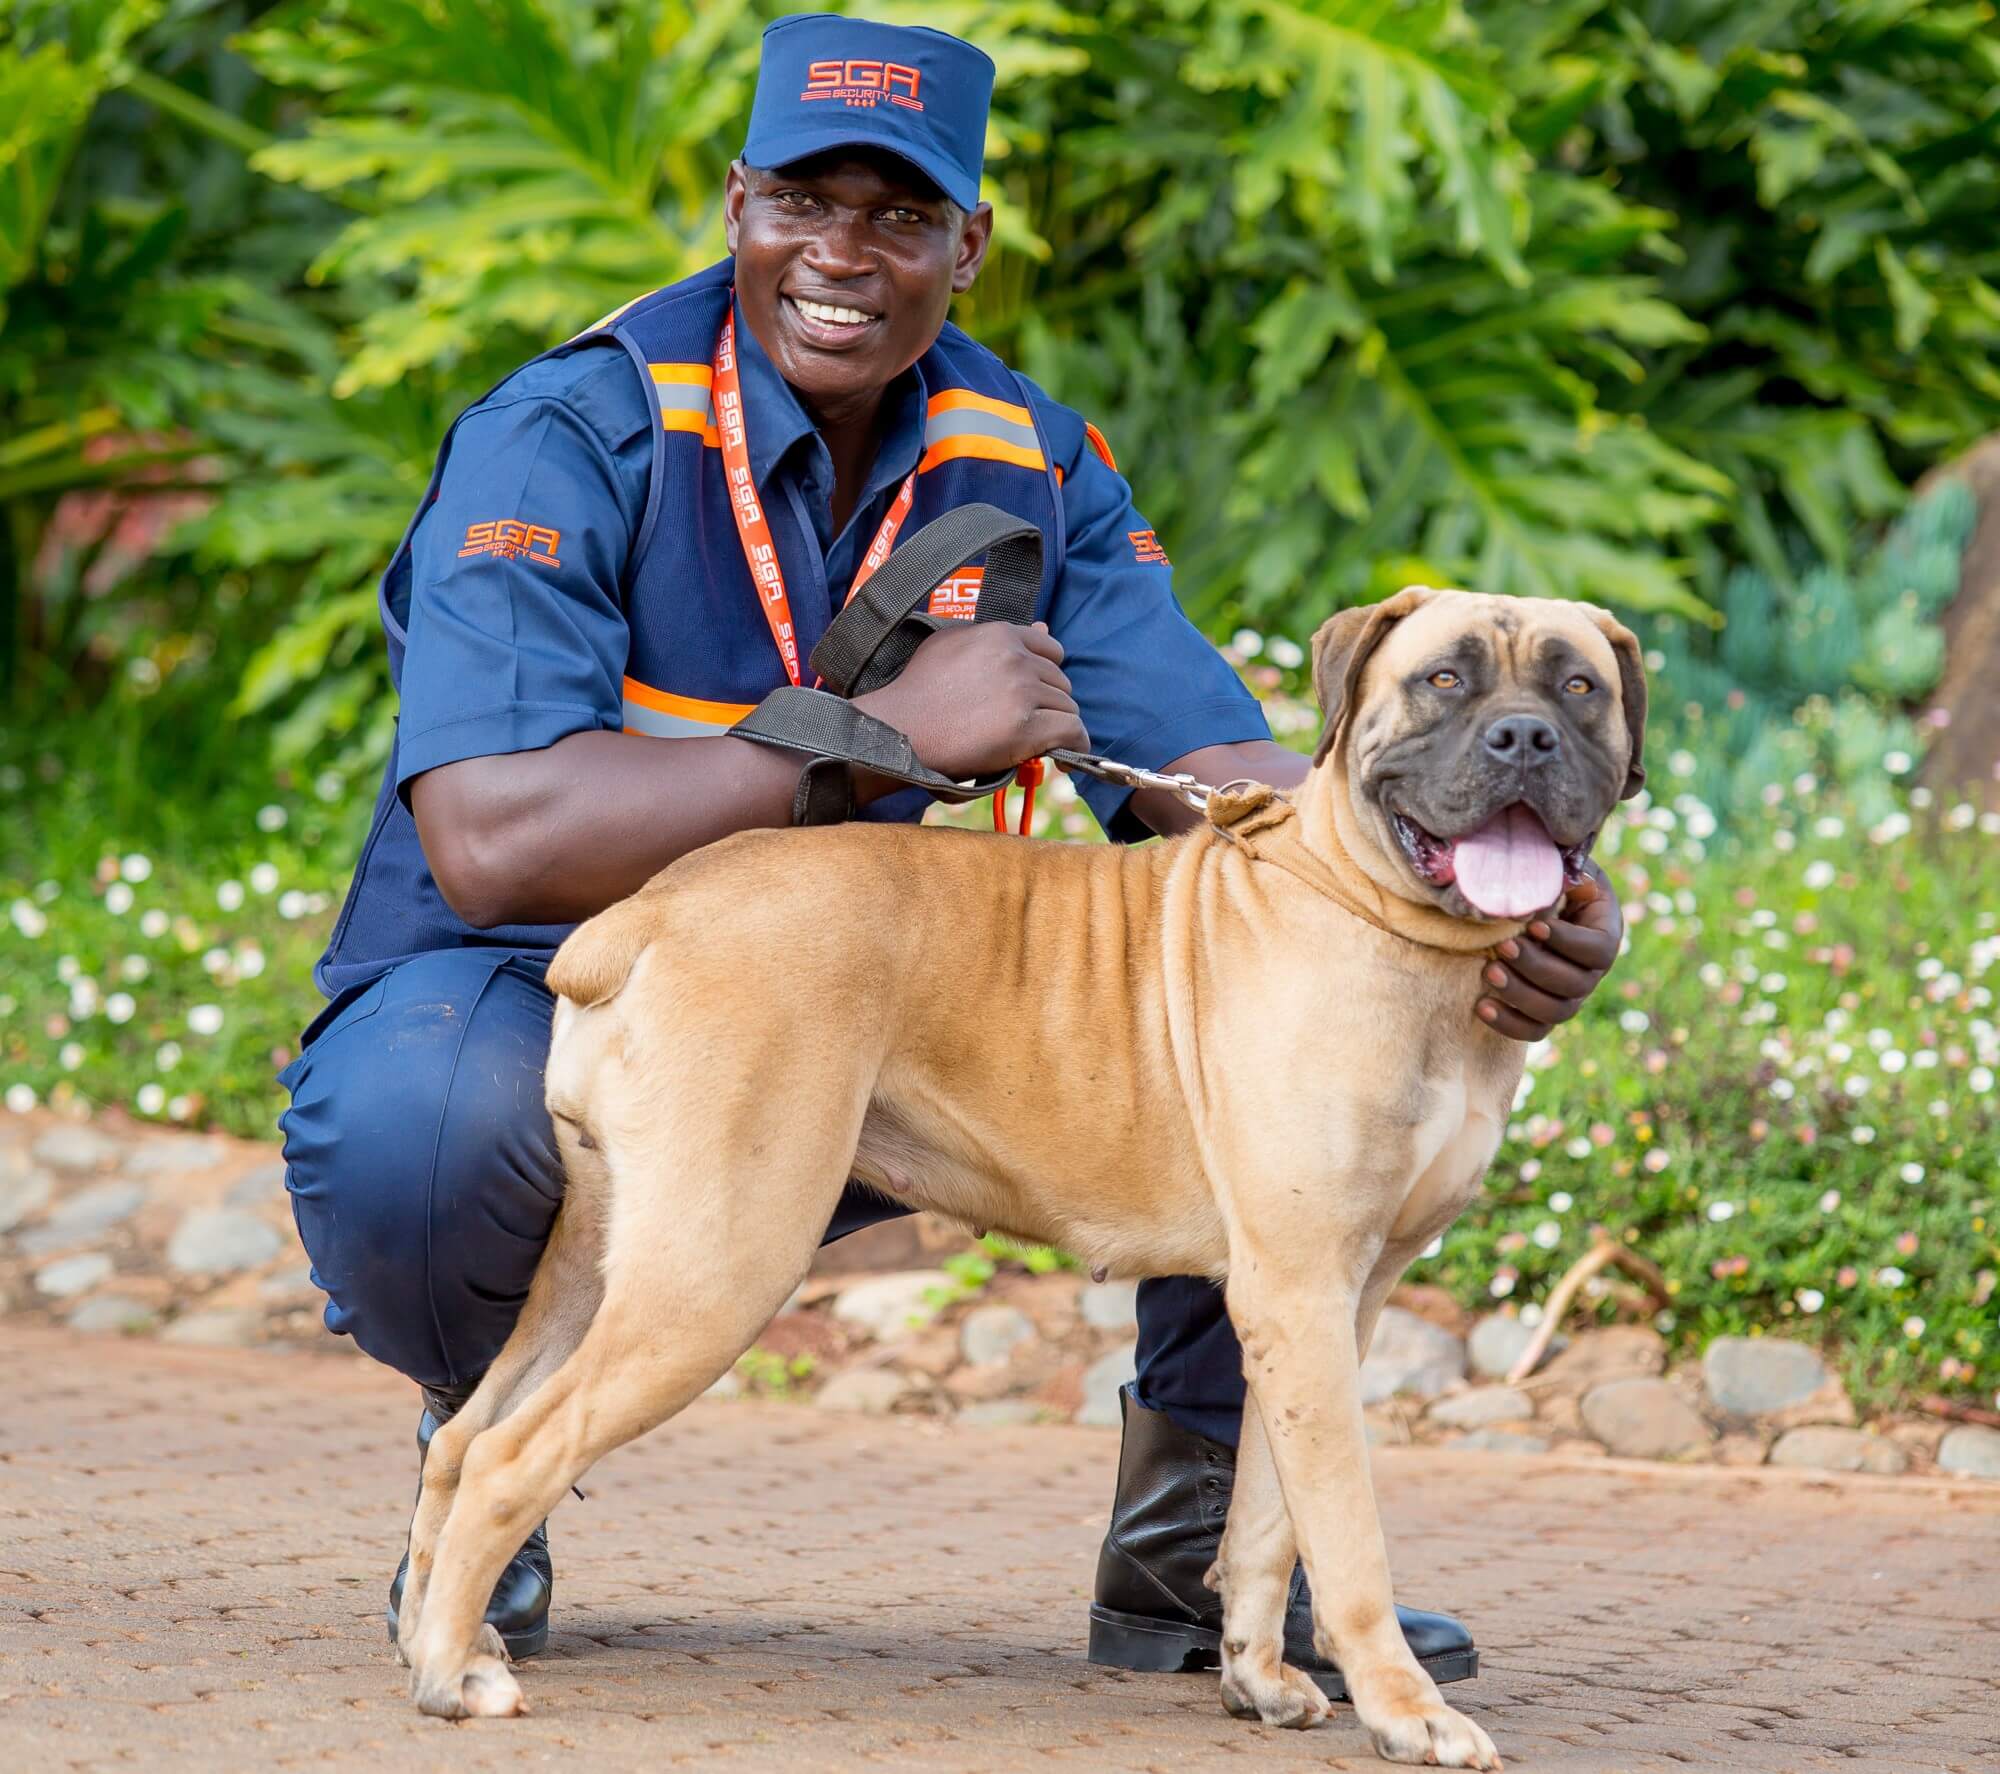 Male dog handler posing with dog